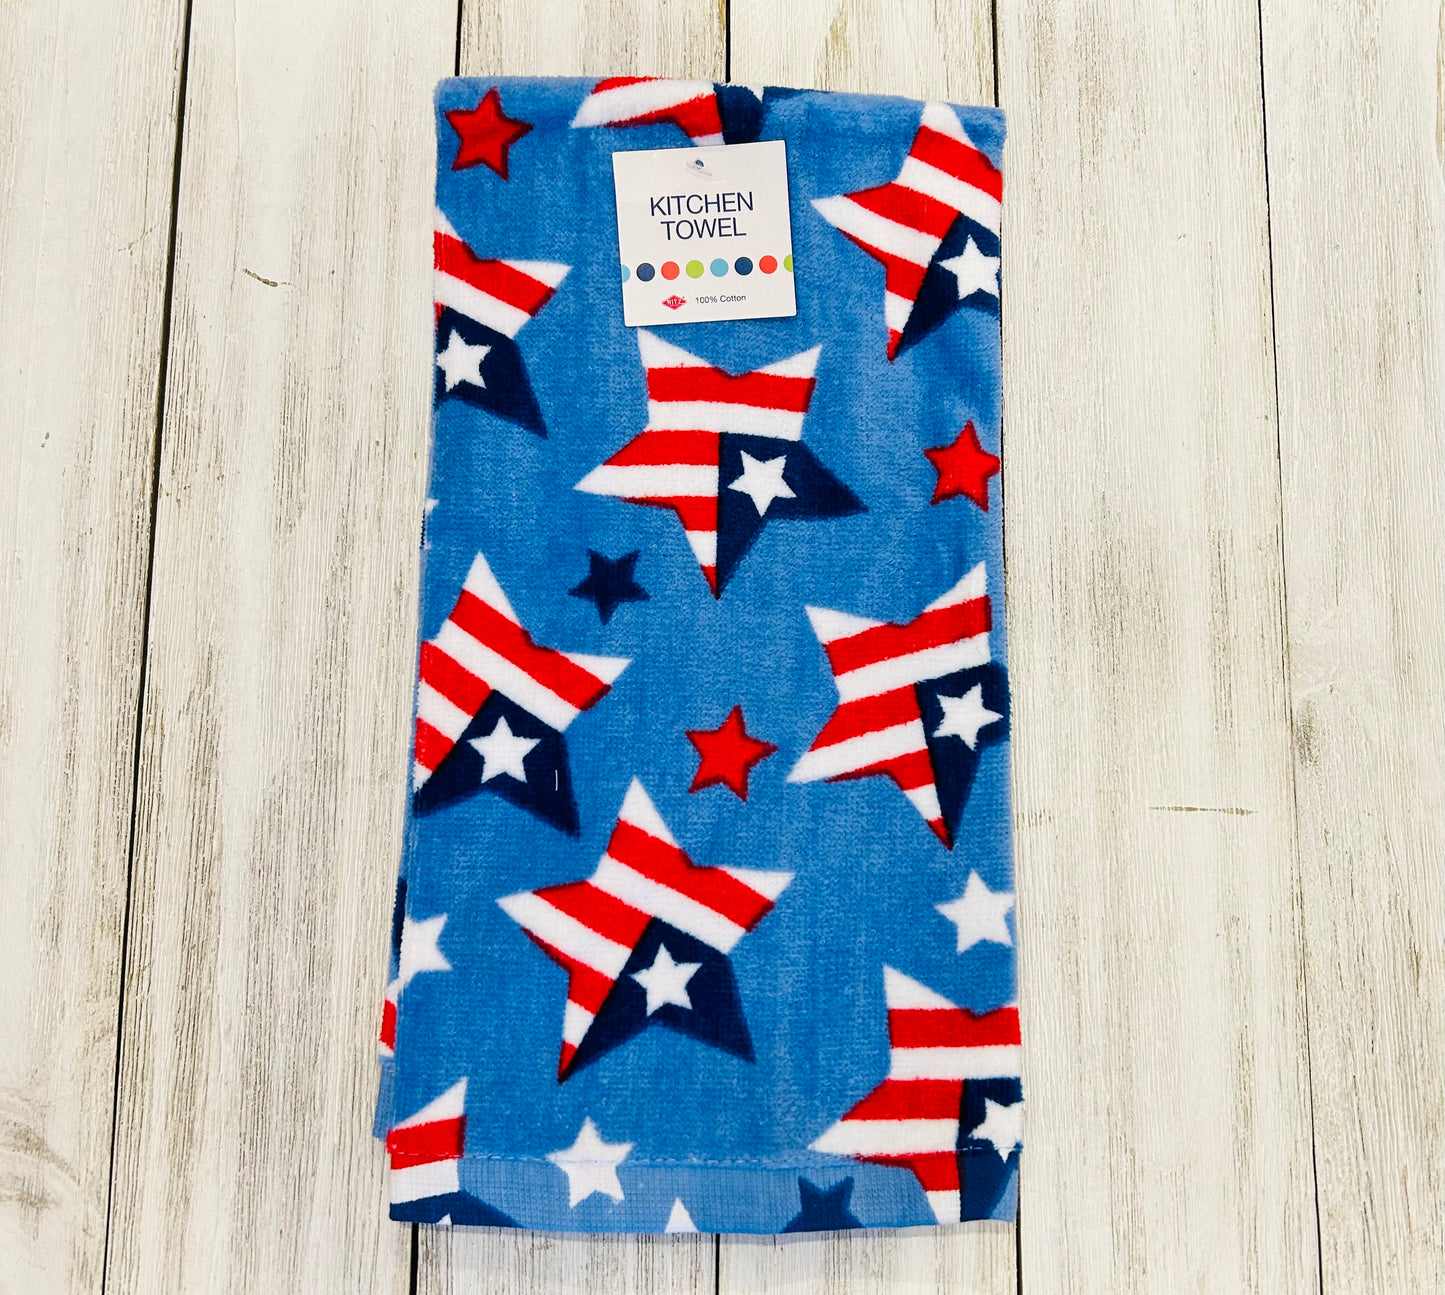 Dish Towel - Patriotic Themed - Stars